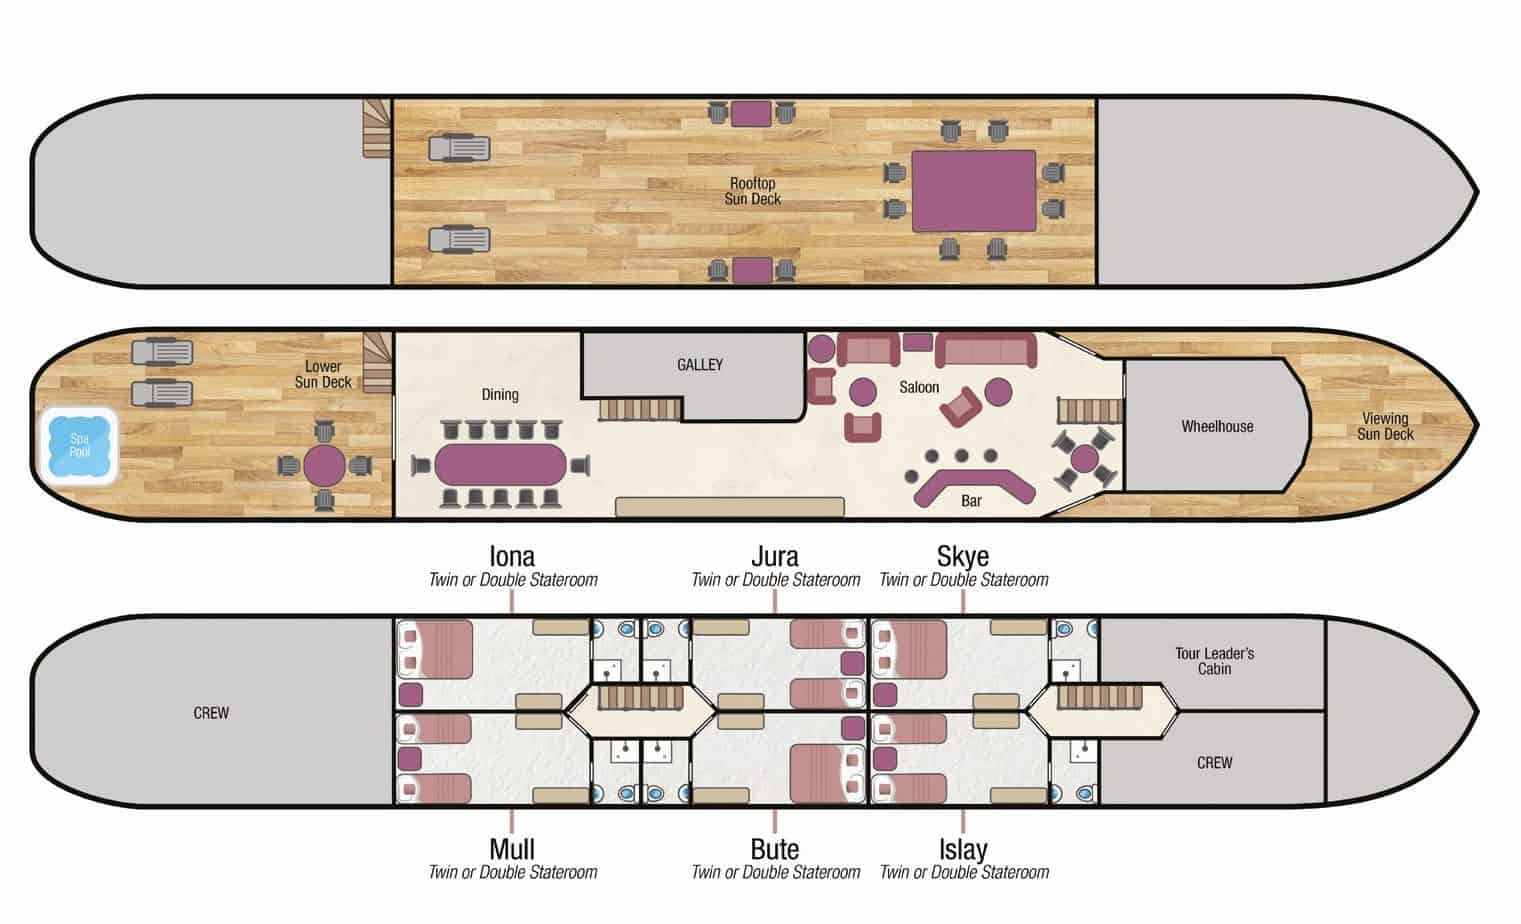 Deckplan of Spirit of Scotland hotel barge with 3 passenger decks, 6 staterooms, dining room, saloon, bar, wheelhouse, spa pool & 3 sun deck areas